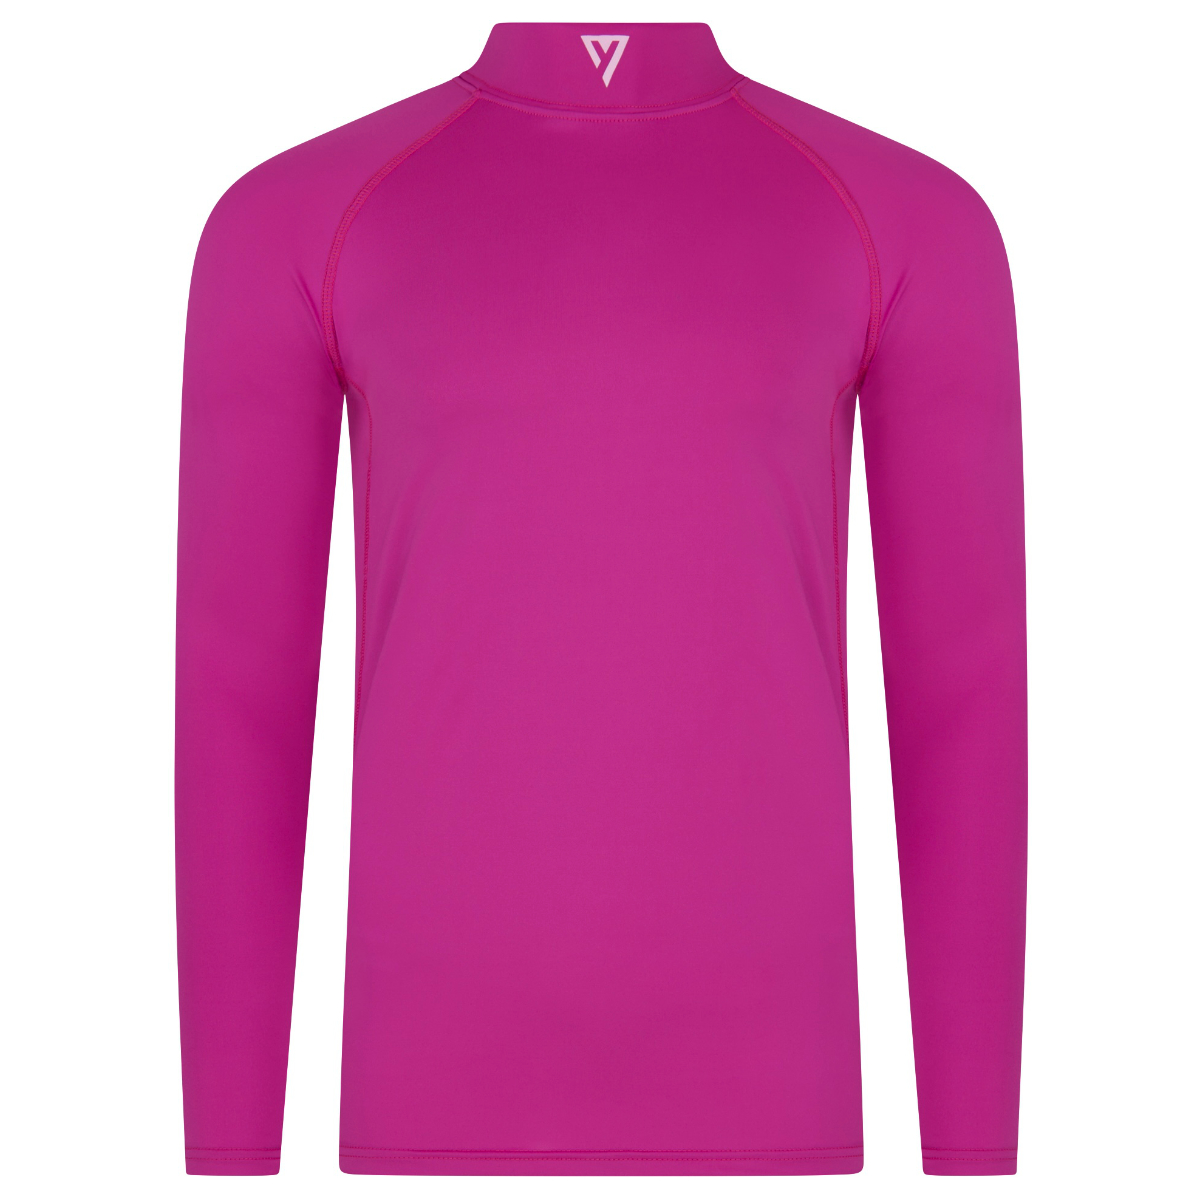 BYRG Ultimate Compression Golf Shirt pink